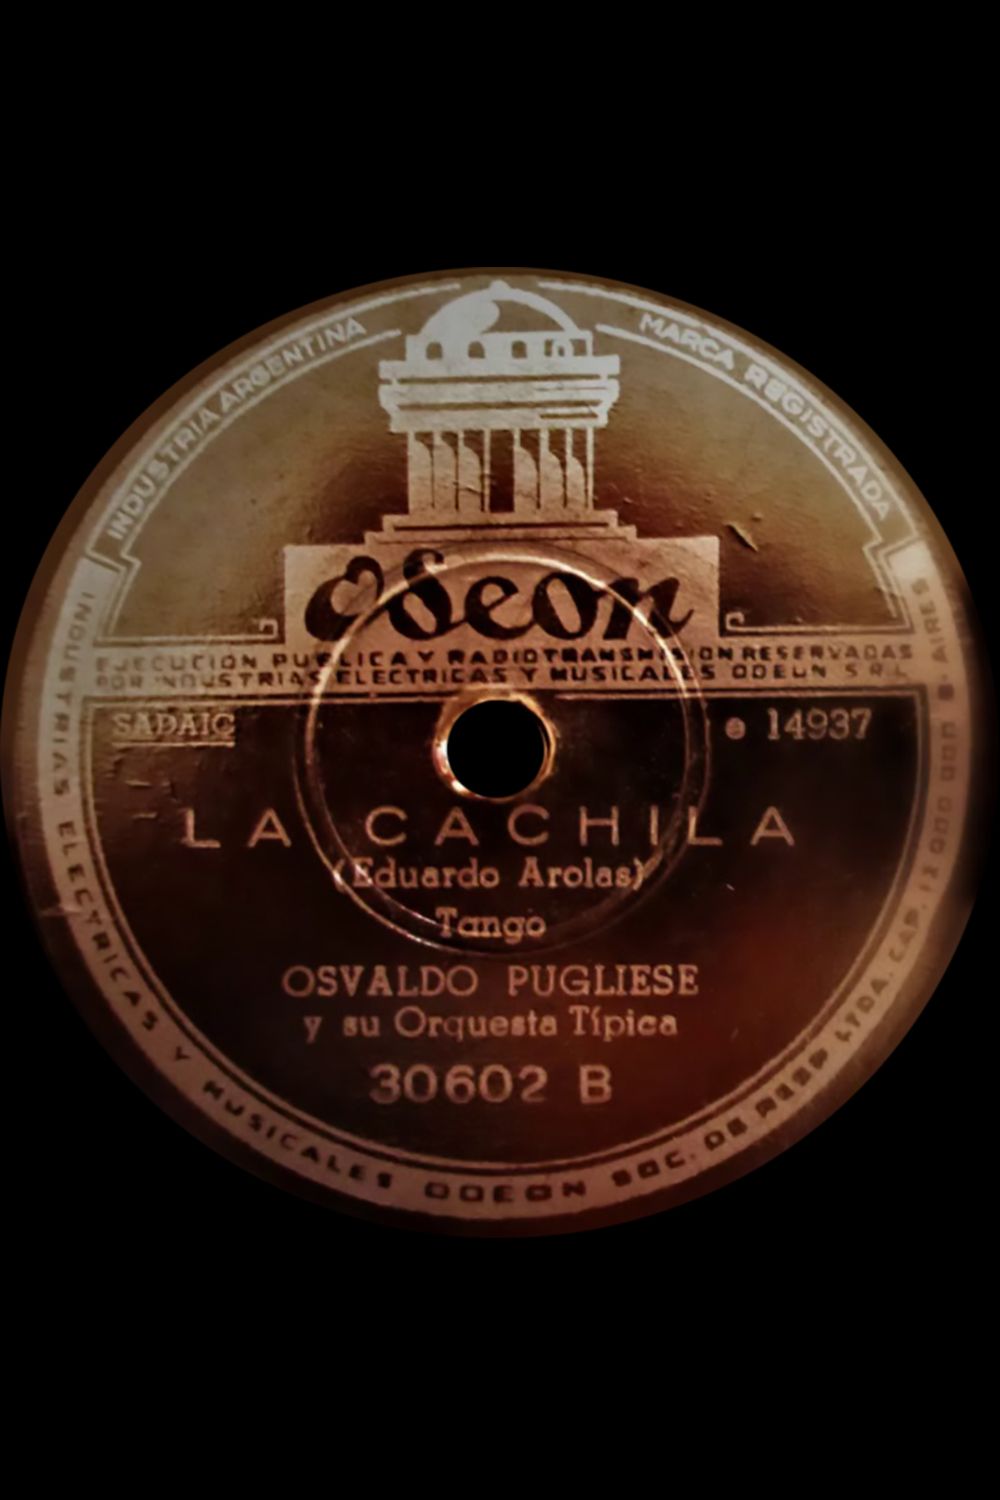 "La cachila", Argentine Tango of Eduardo Arolas by Osvaldo Pugliese, vinyl disc.